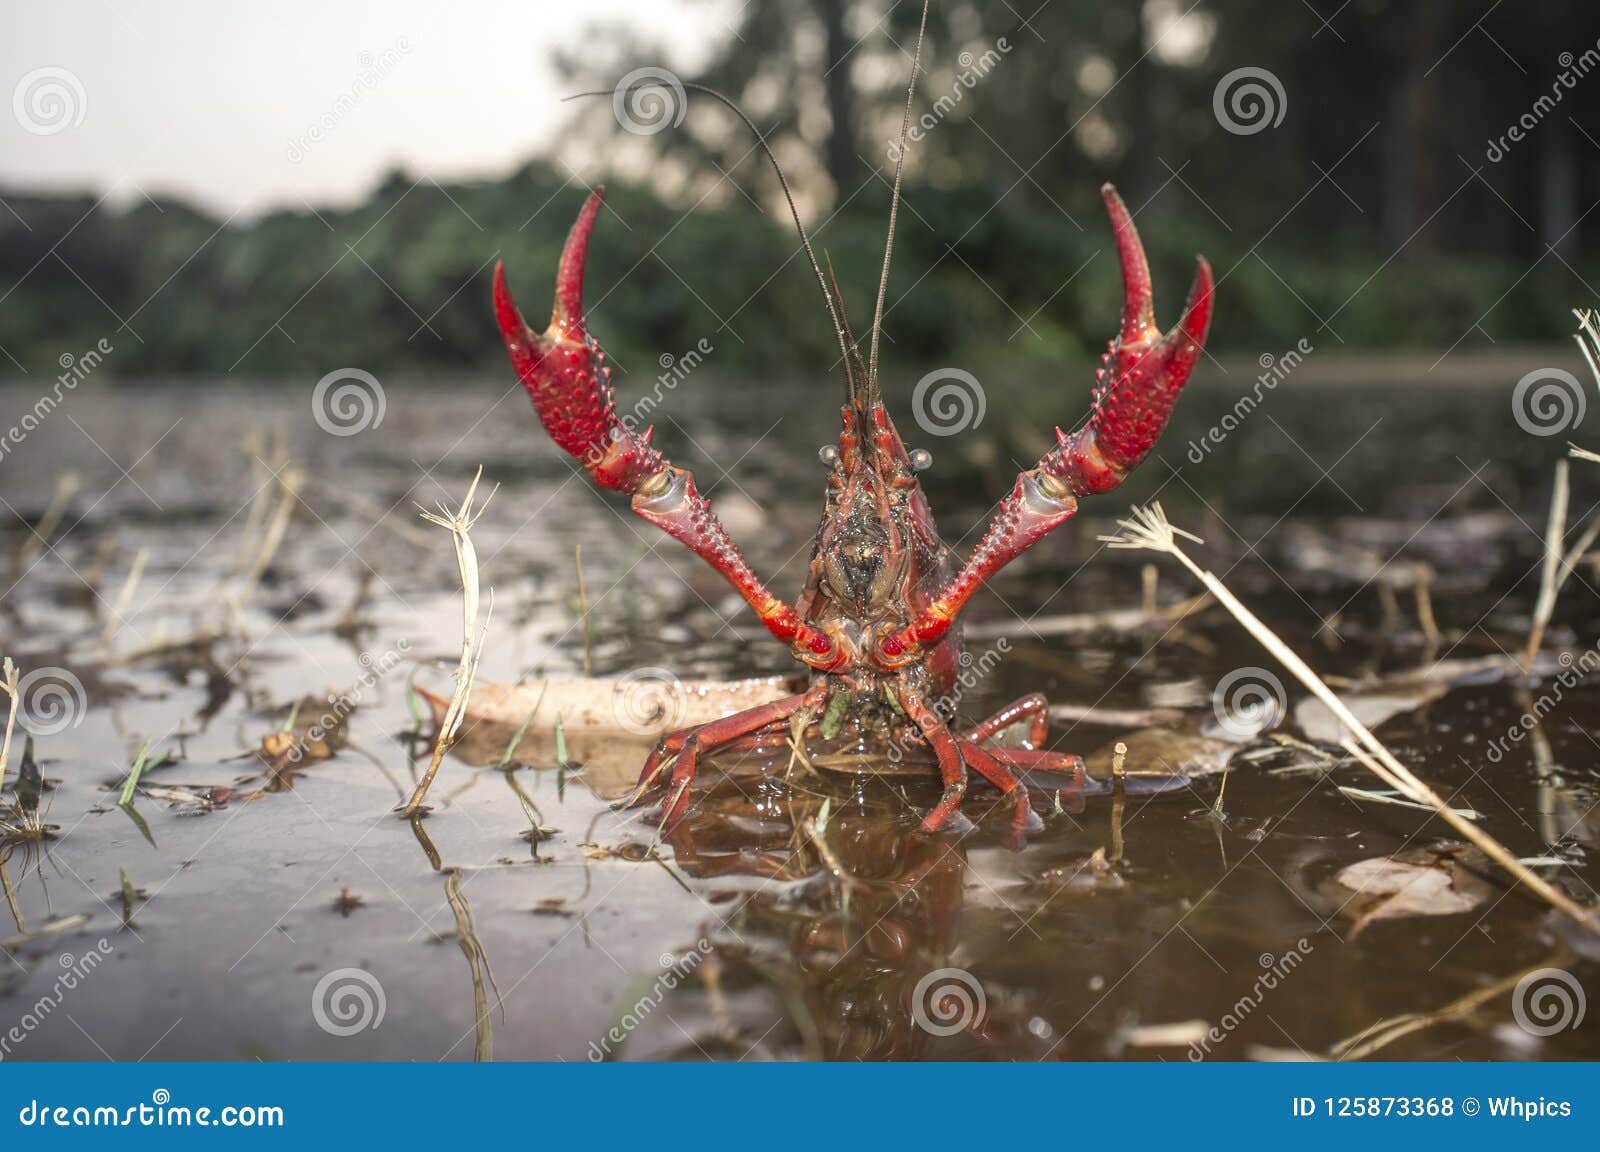 Red Swamp Crawfish Near Guadiana Riverside, Badajoz, Spain ...